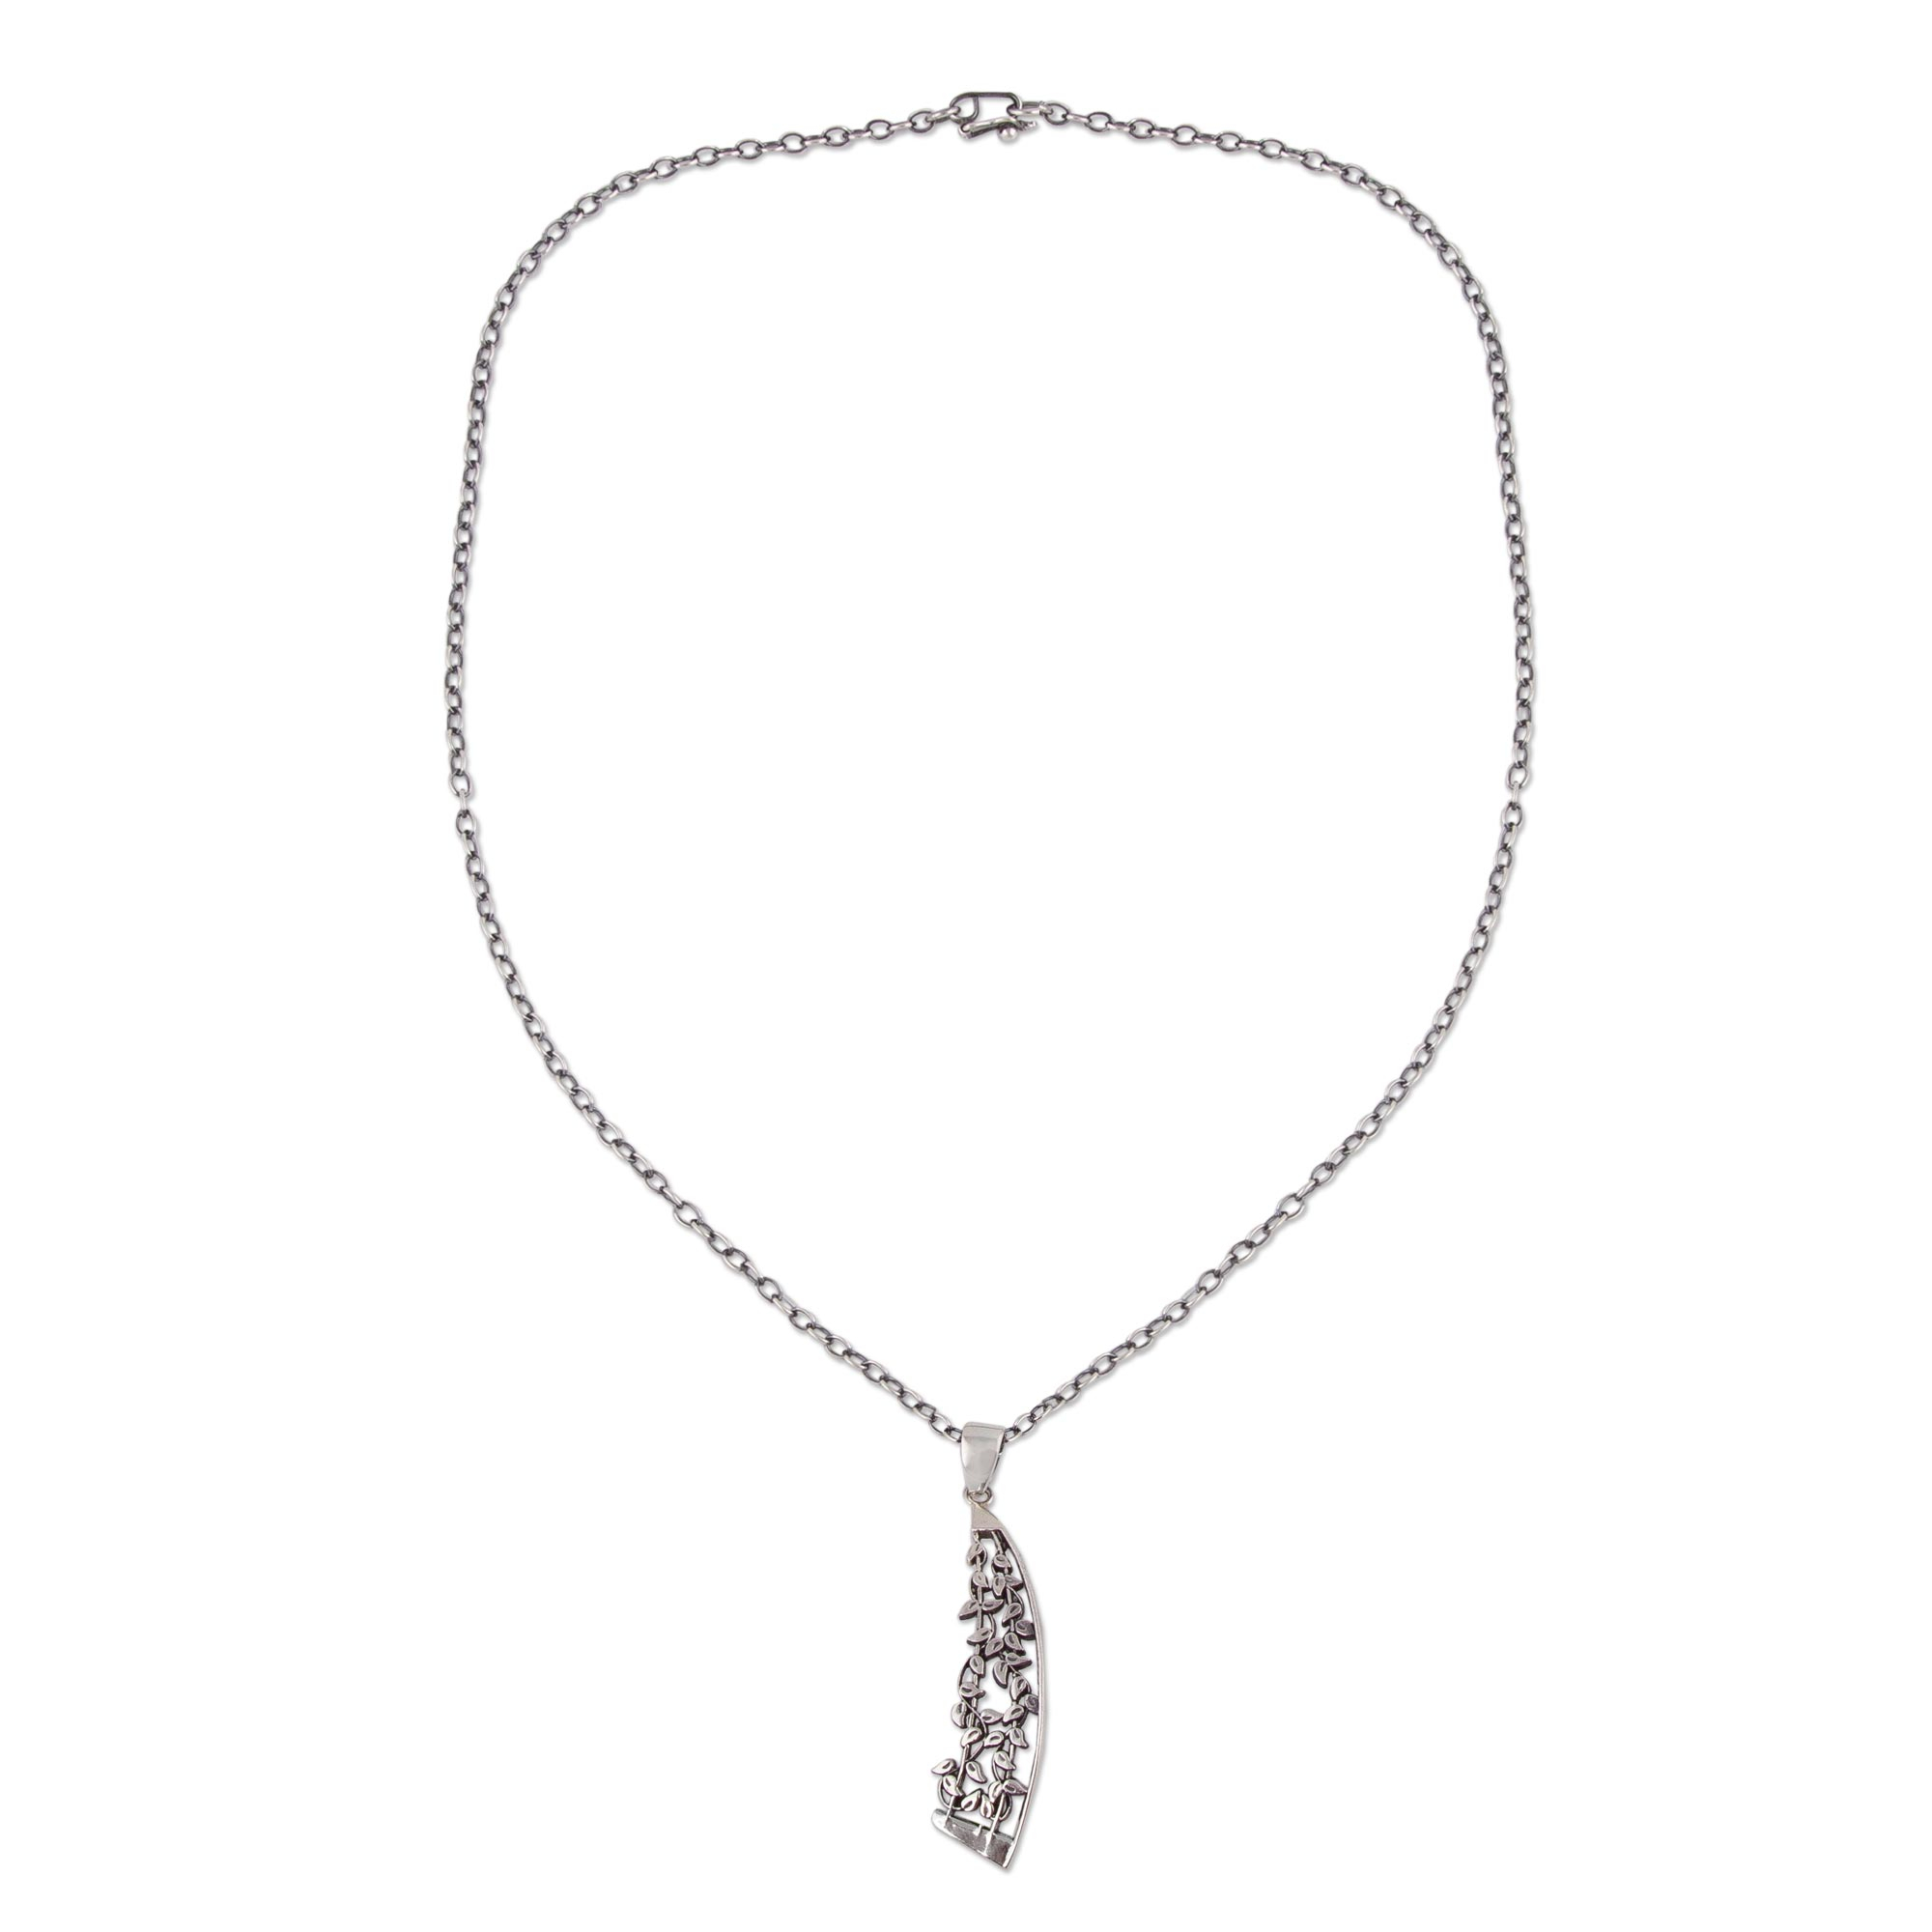 Sterling Silver Leaf Motif Pendant Necklace from Peru - Enchanted Vine ...